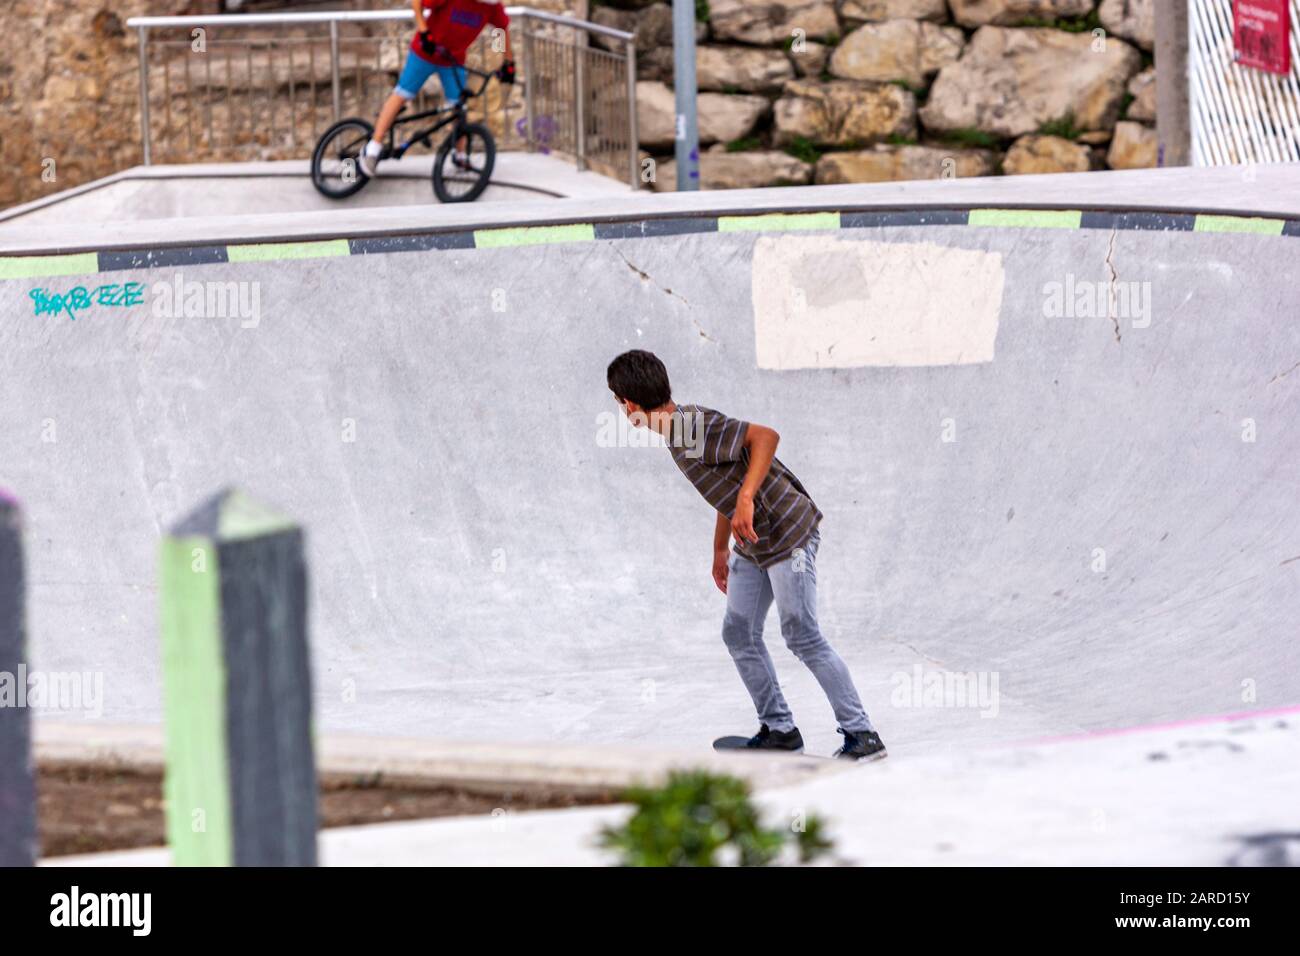 Young boy practising skateboard in La Pista Skate, Gijon, Asturias, Spain  Stock Photo - Alamy